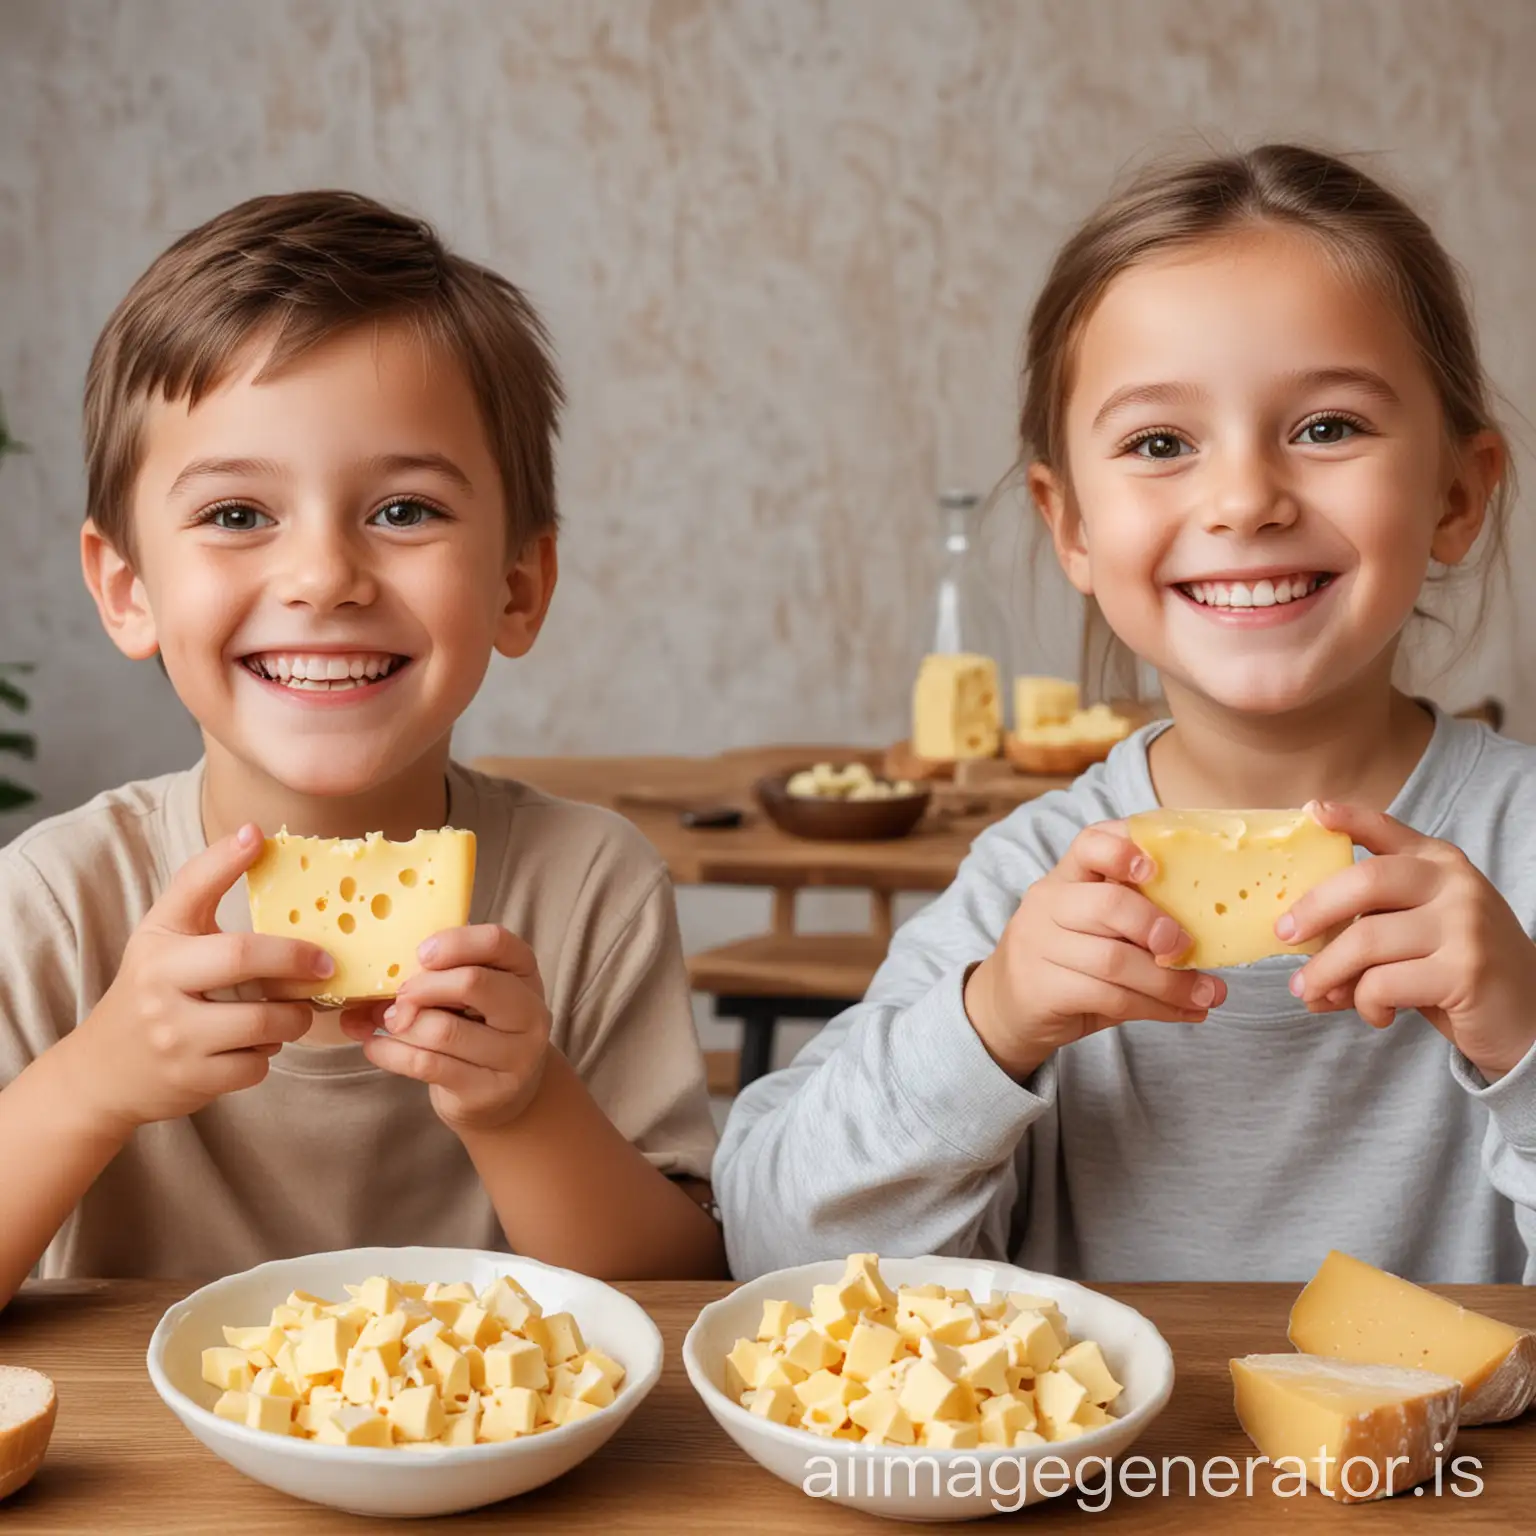 CheeseLoving-Kids-Admiring-Plentiful-Cheese-Spread